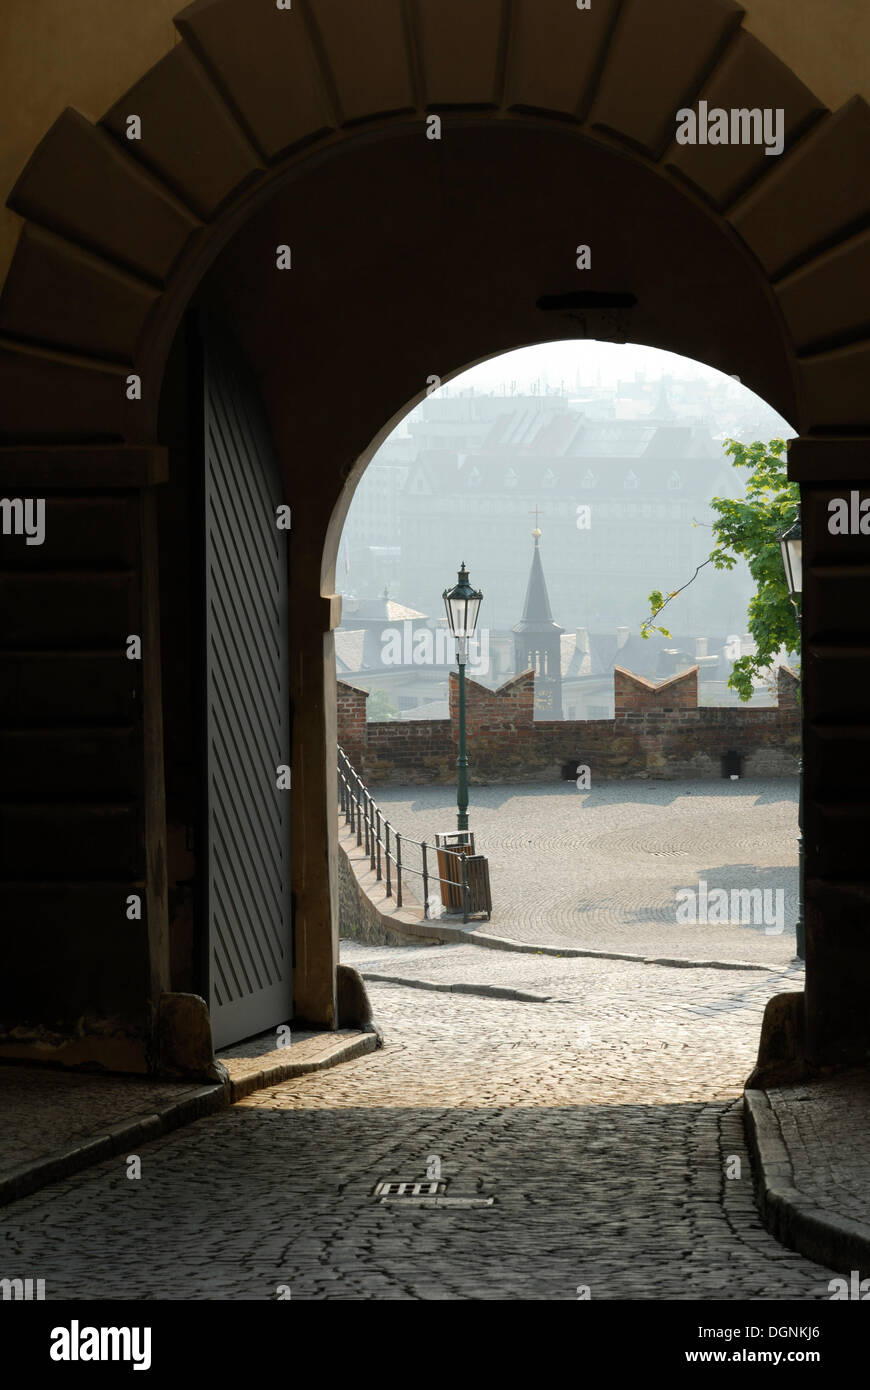 Gate of a palace, Prague, Czech Republic, Europe Stock Photo